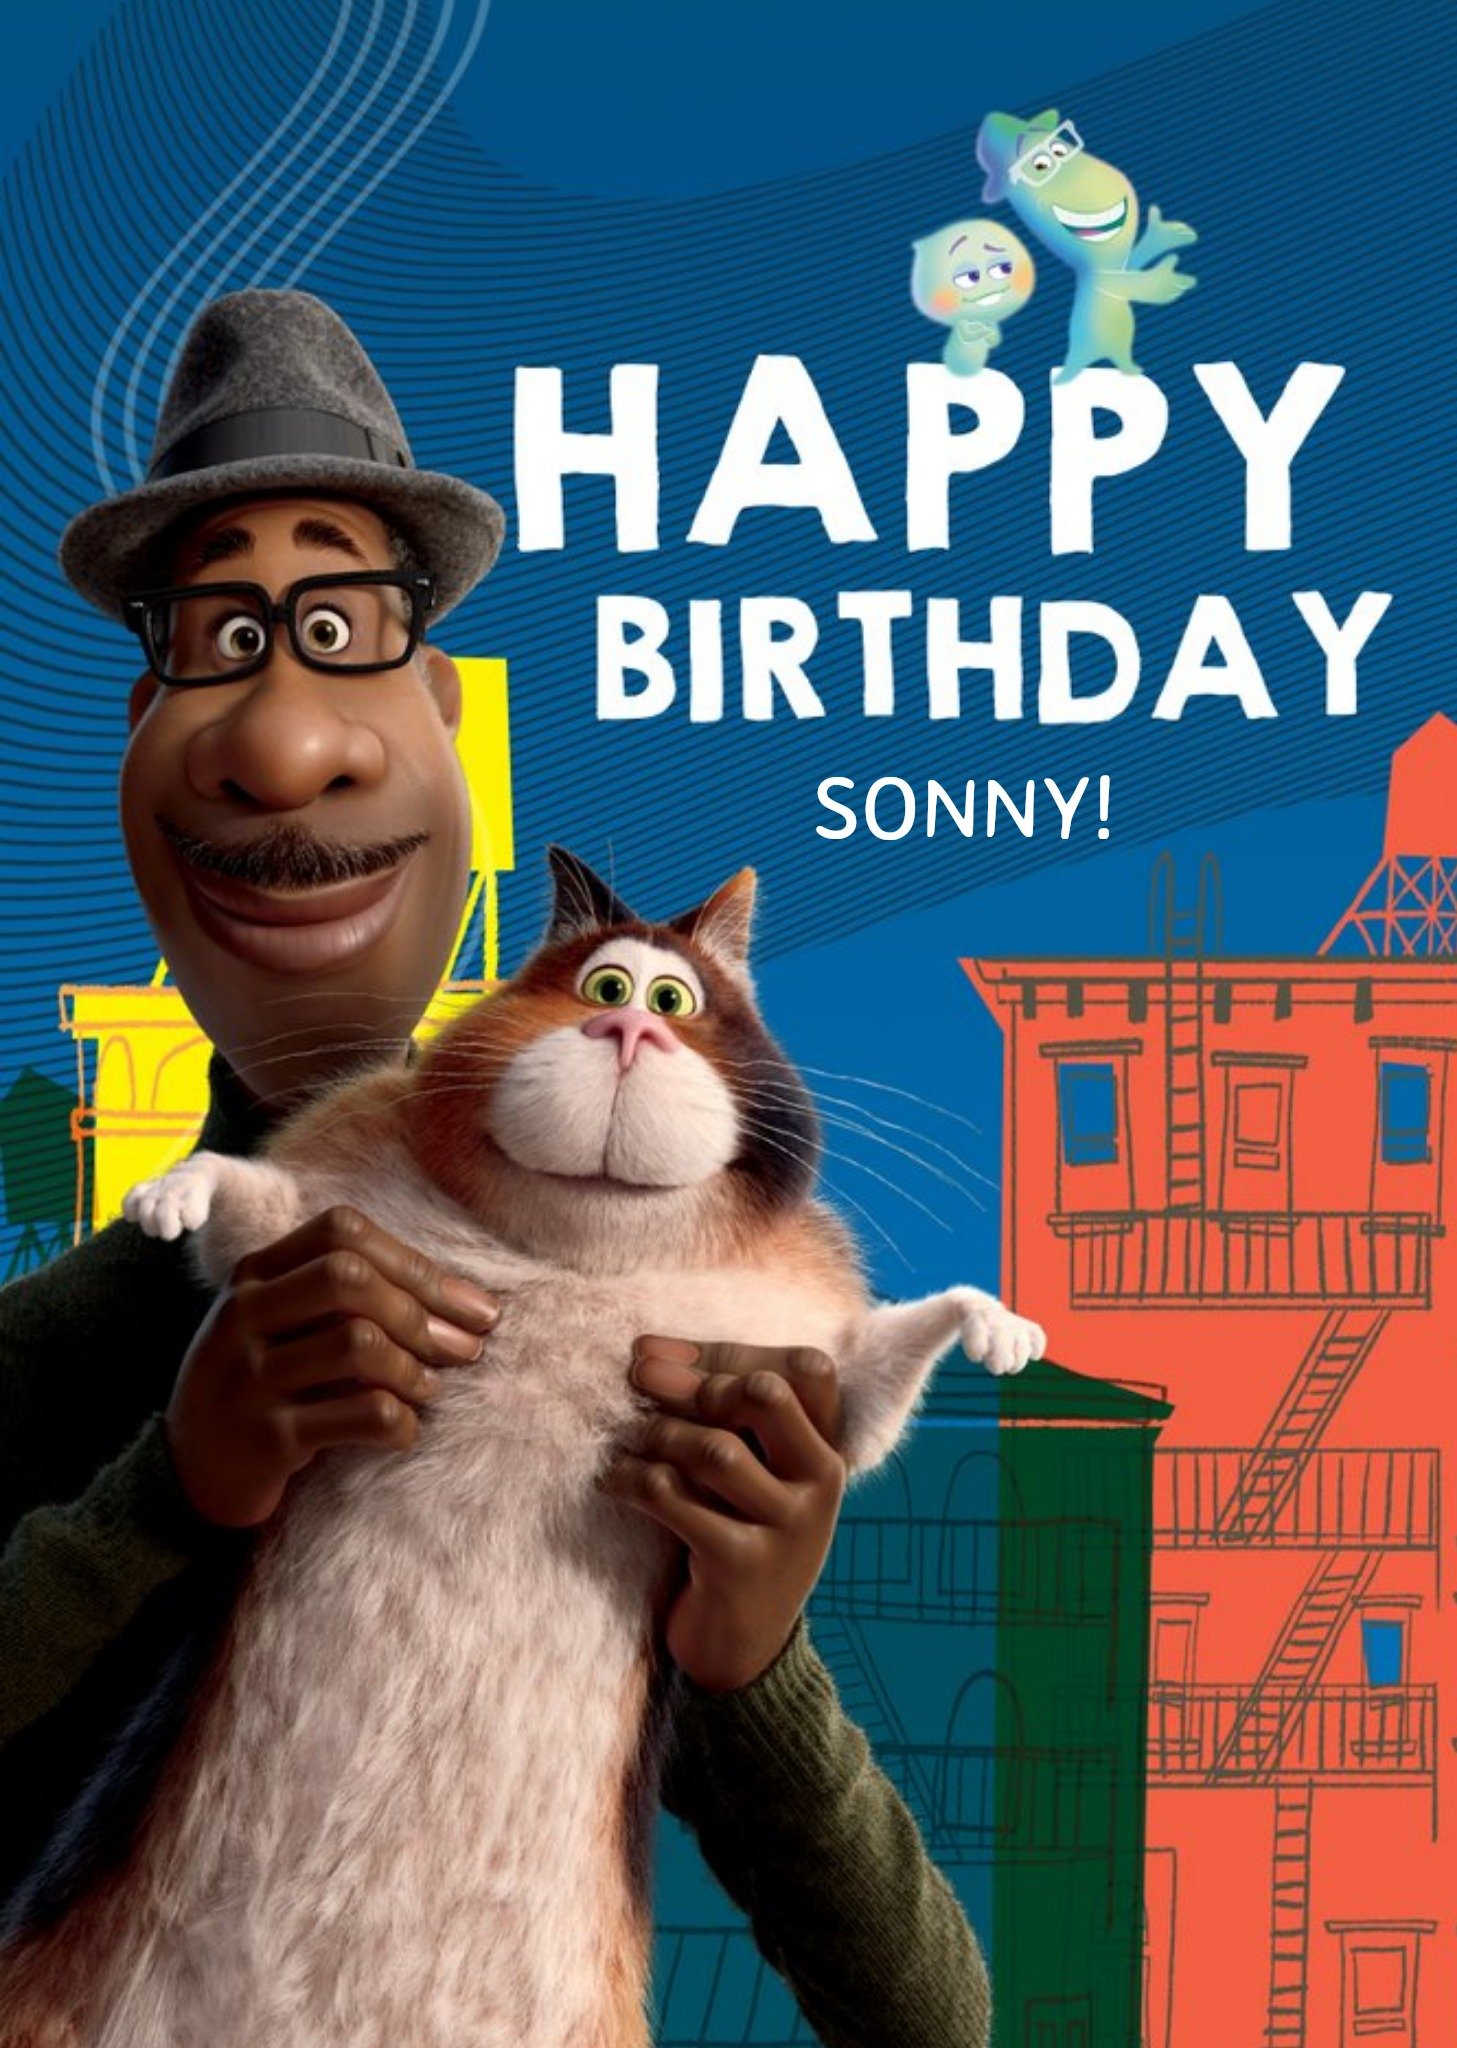 Disney Pixar Soul Happy Birthday Card Ecard